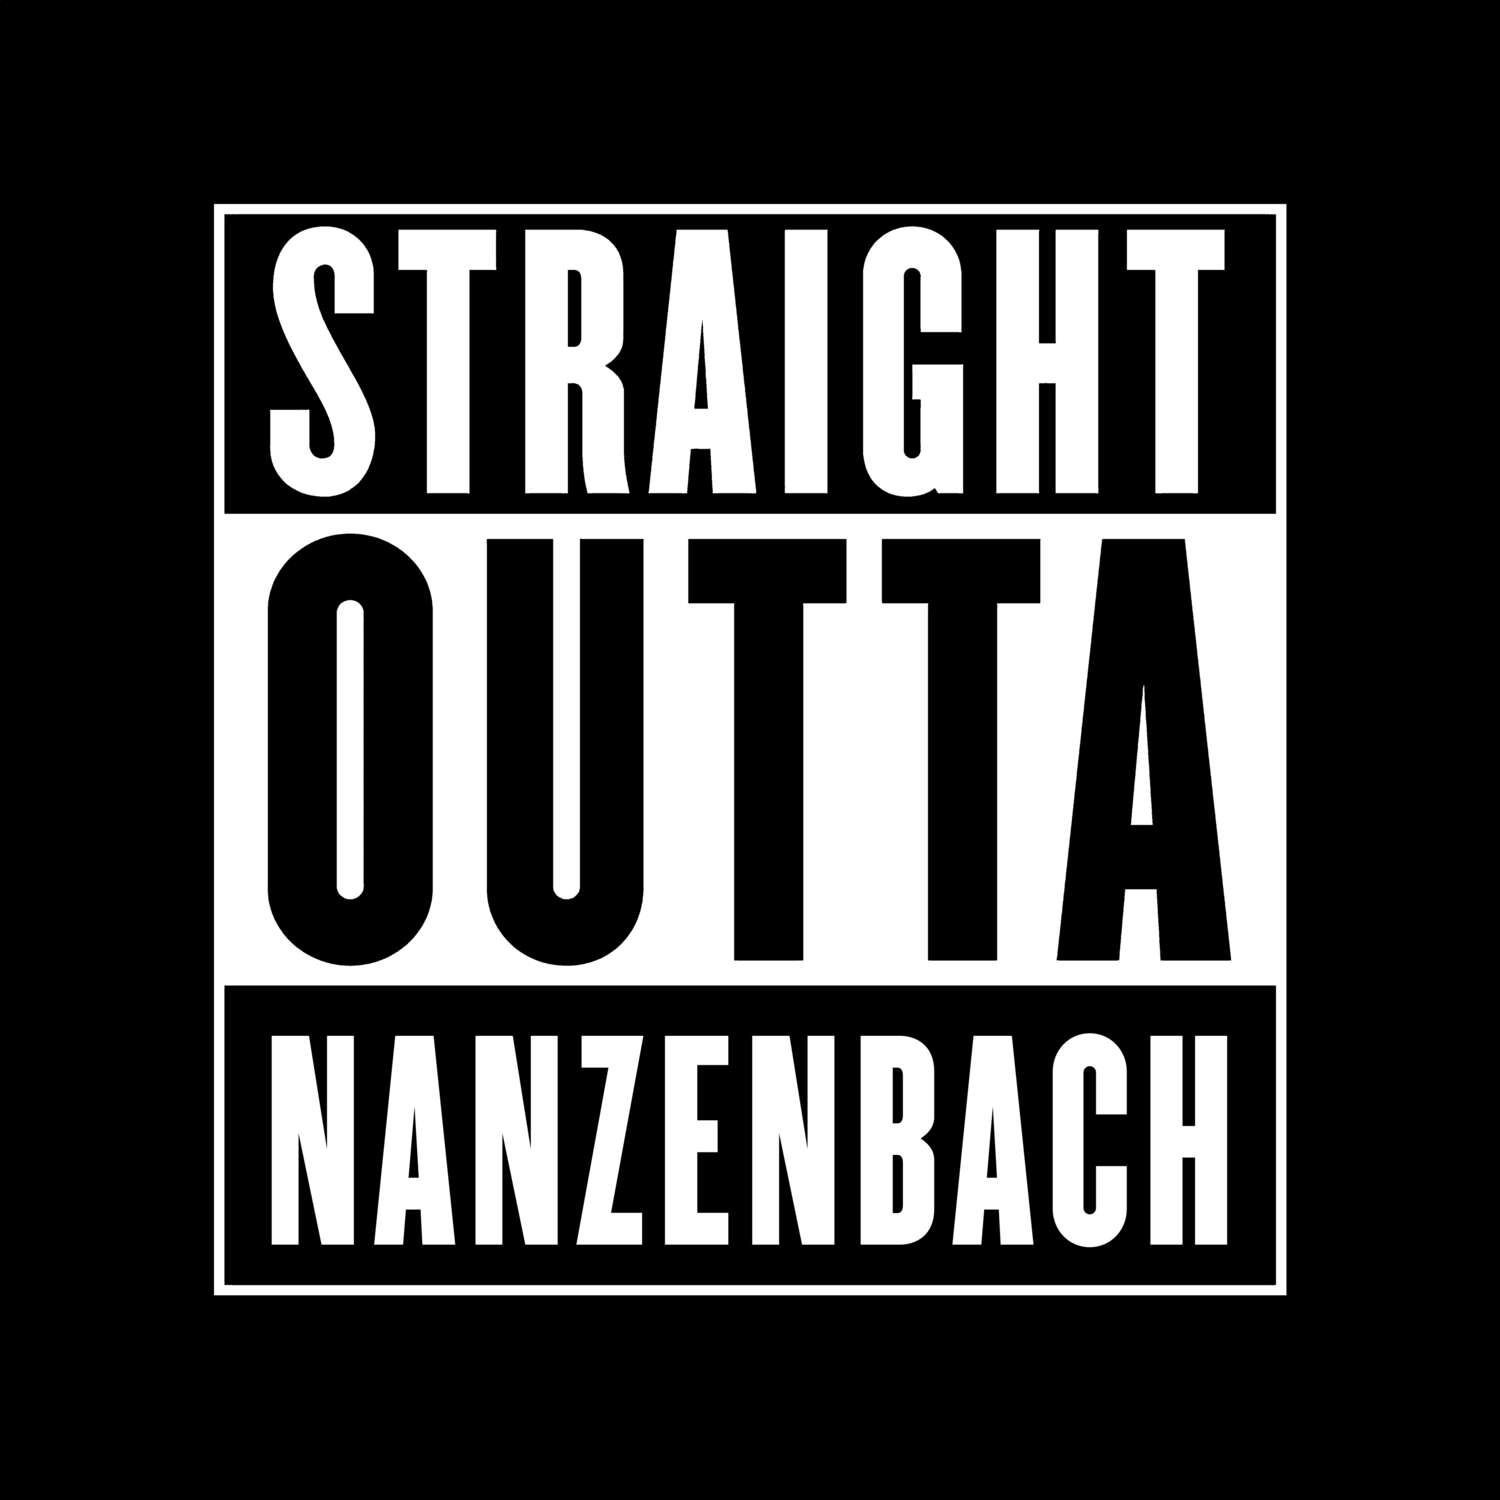 Nanzenbach T-Shirt »Straight Outta«